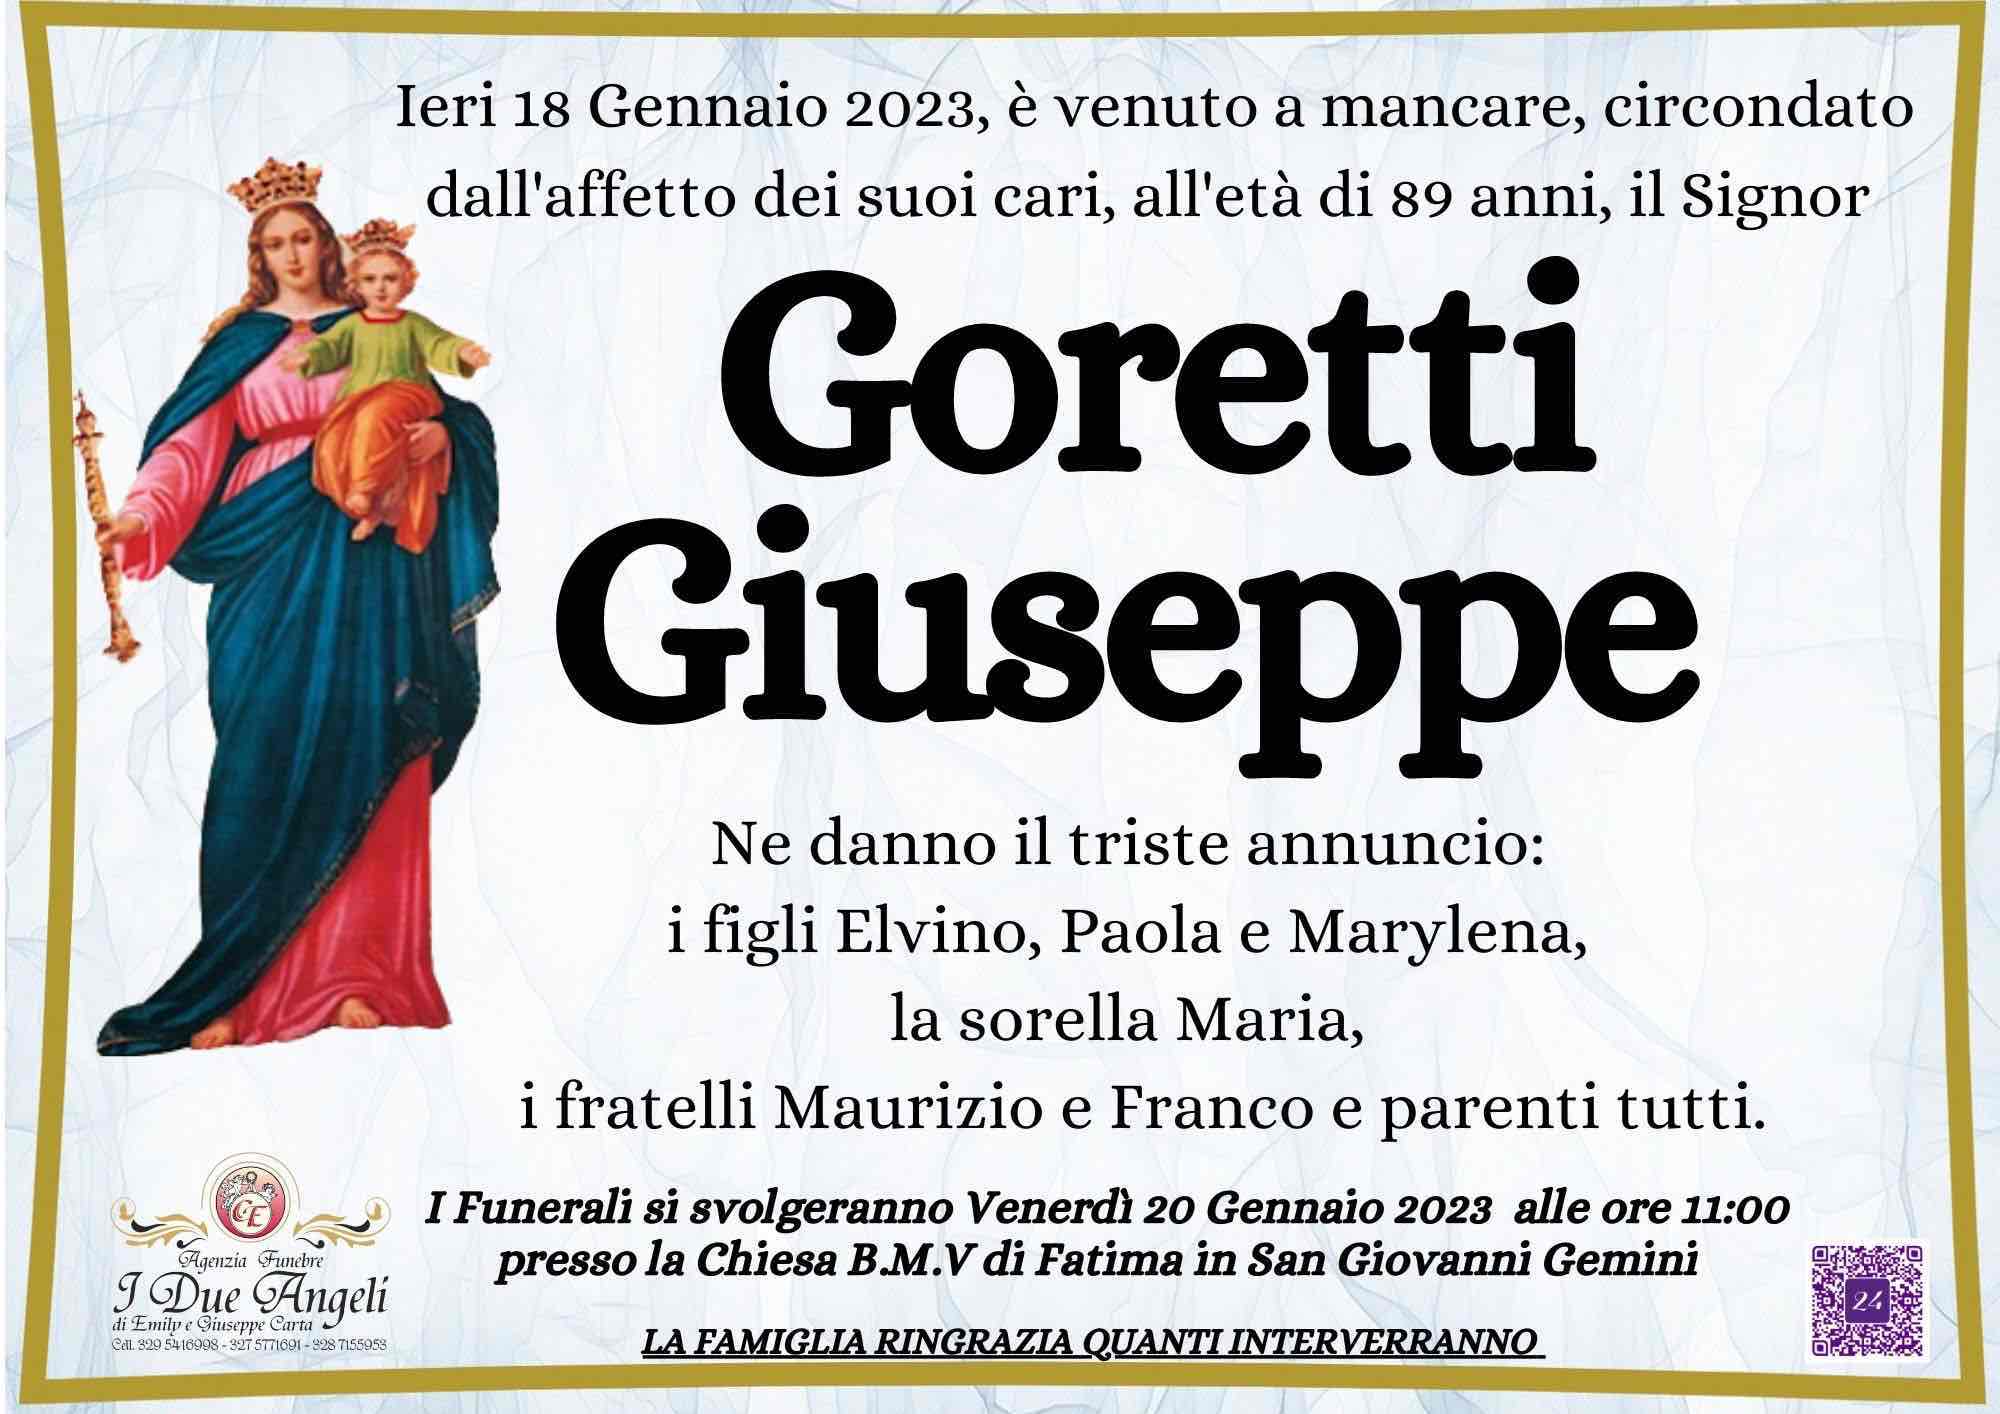 Giuseppe Goretti